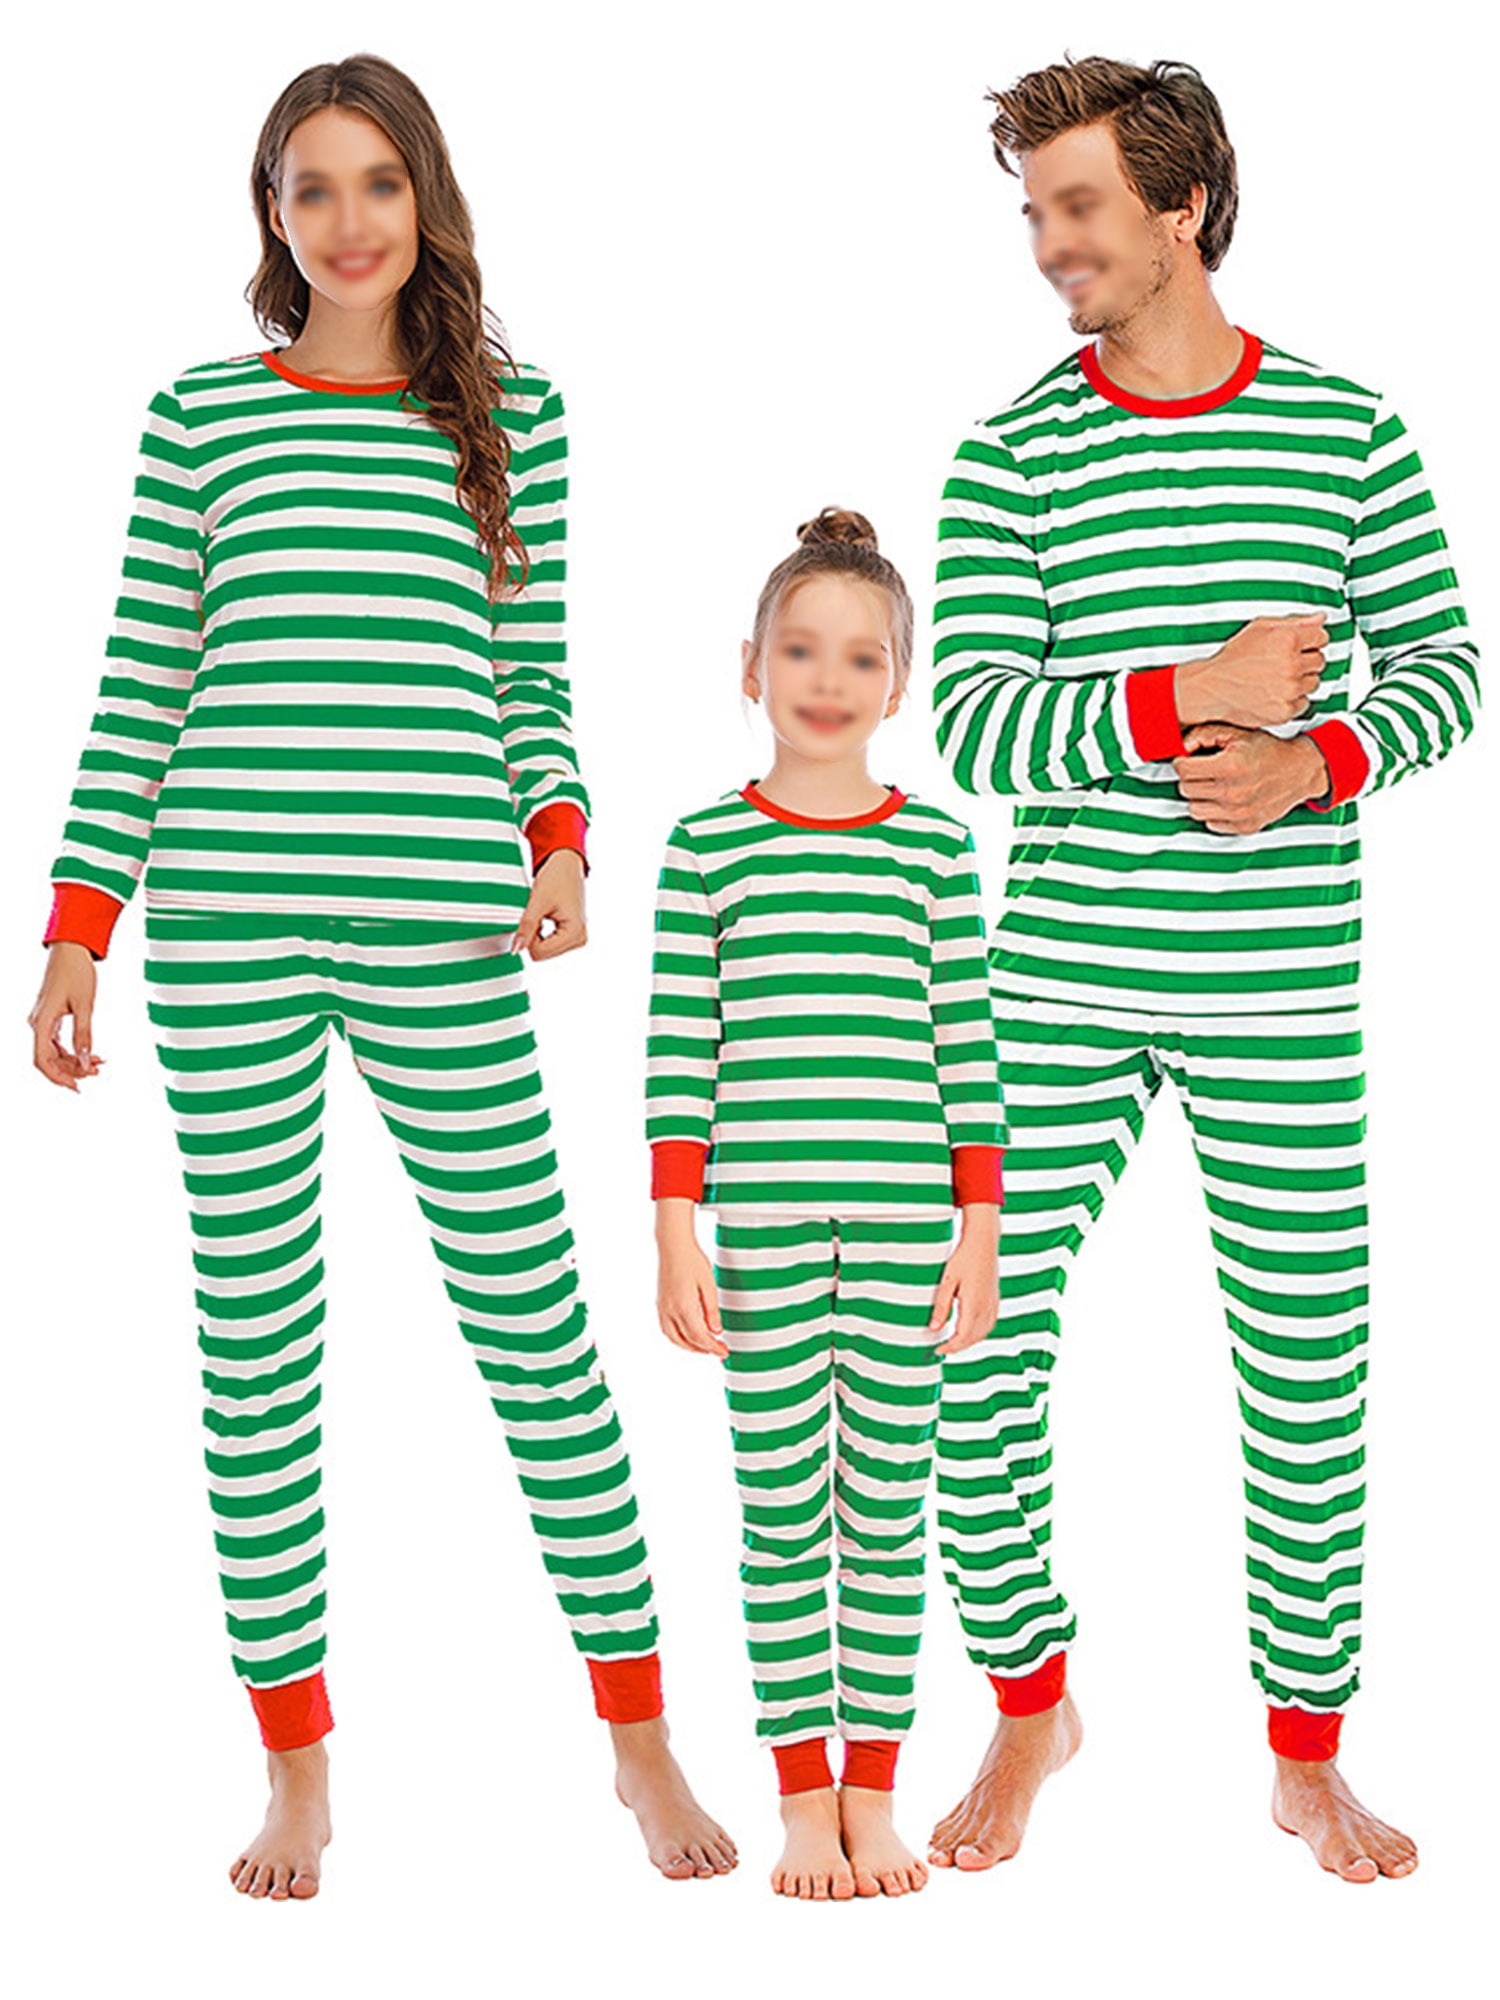 Pants Ribbed Casual Christmas Nightwear Outfits Set Infant Newborn Baby Pajamas Set Stripe Long Sleeve Sleepwear 